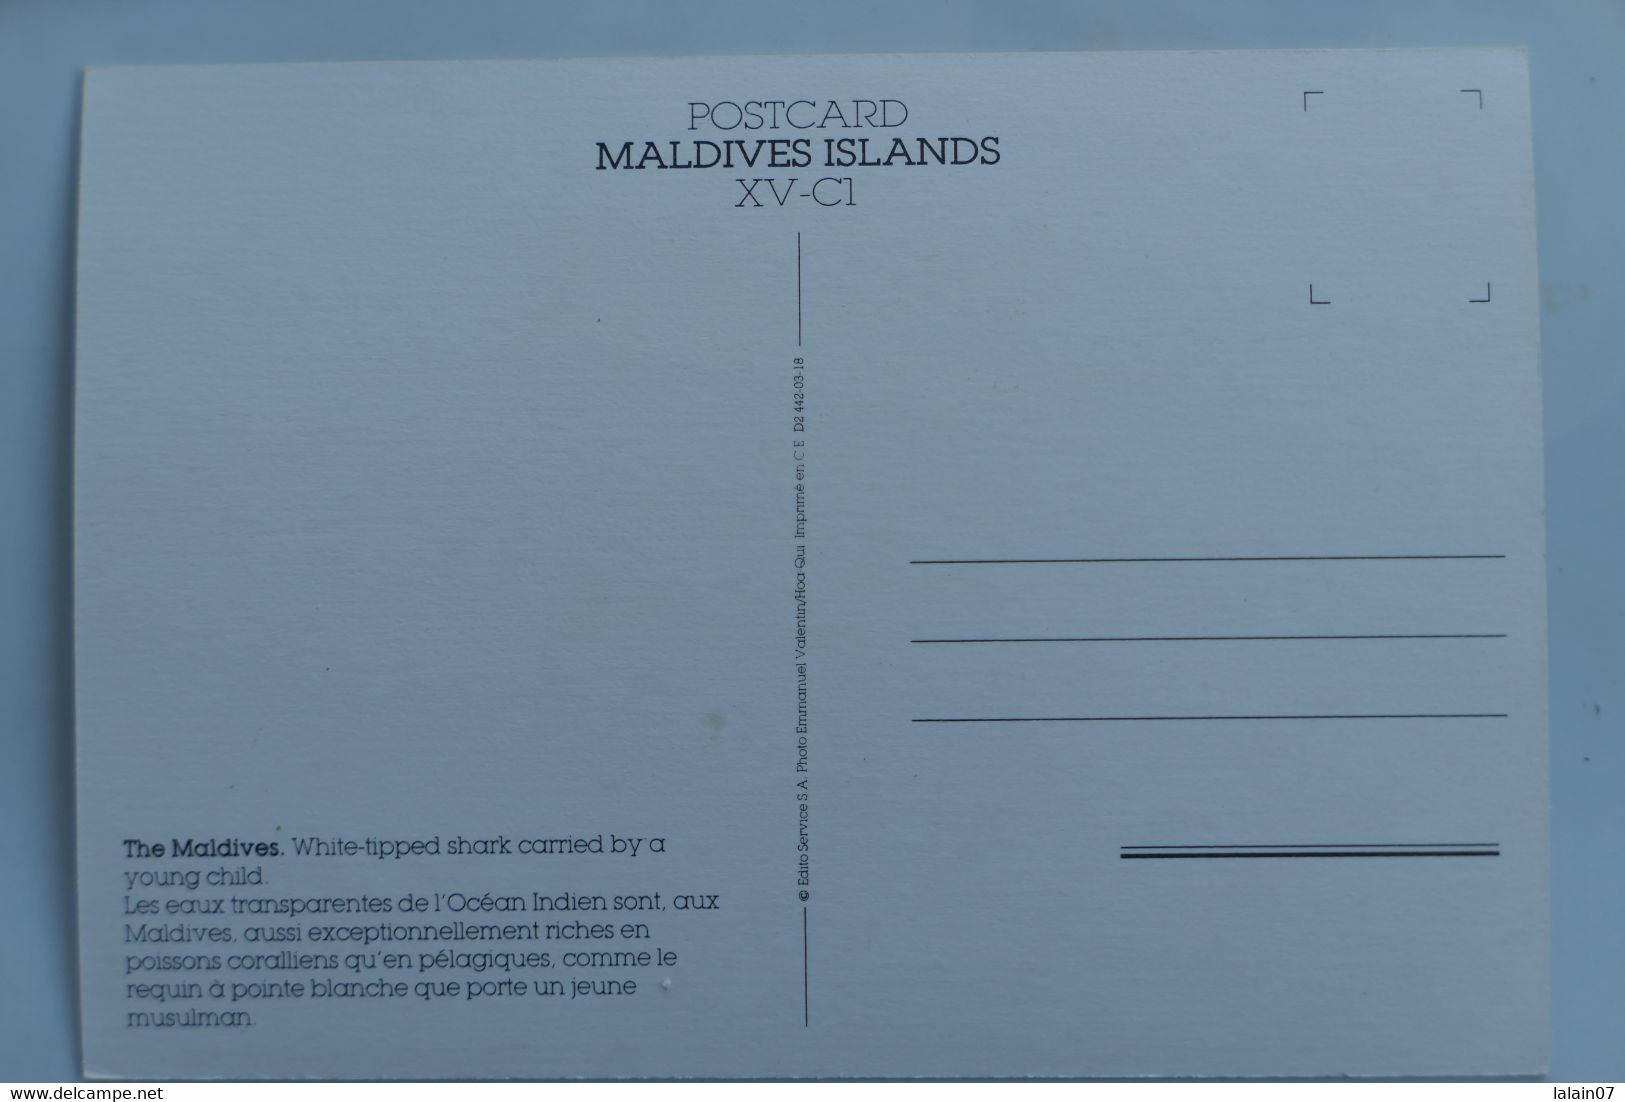 Carte Postale : Maldives Islands : White Tipped Shark Carried By A Young Child, Requin à Pointe Blanche Porté Un Jeune - Maldives